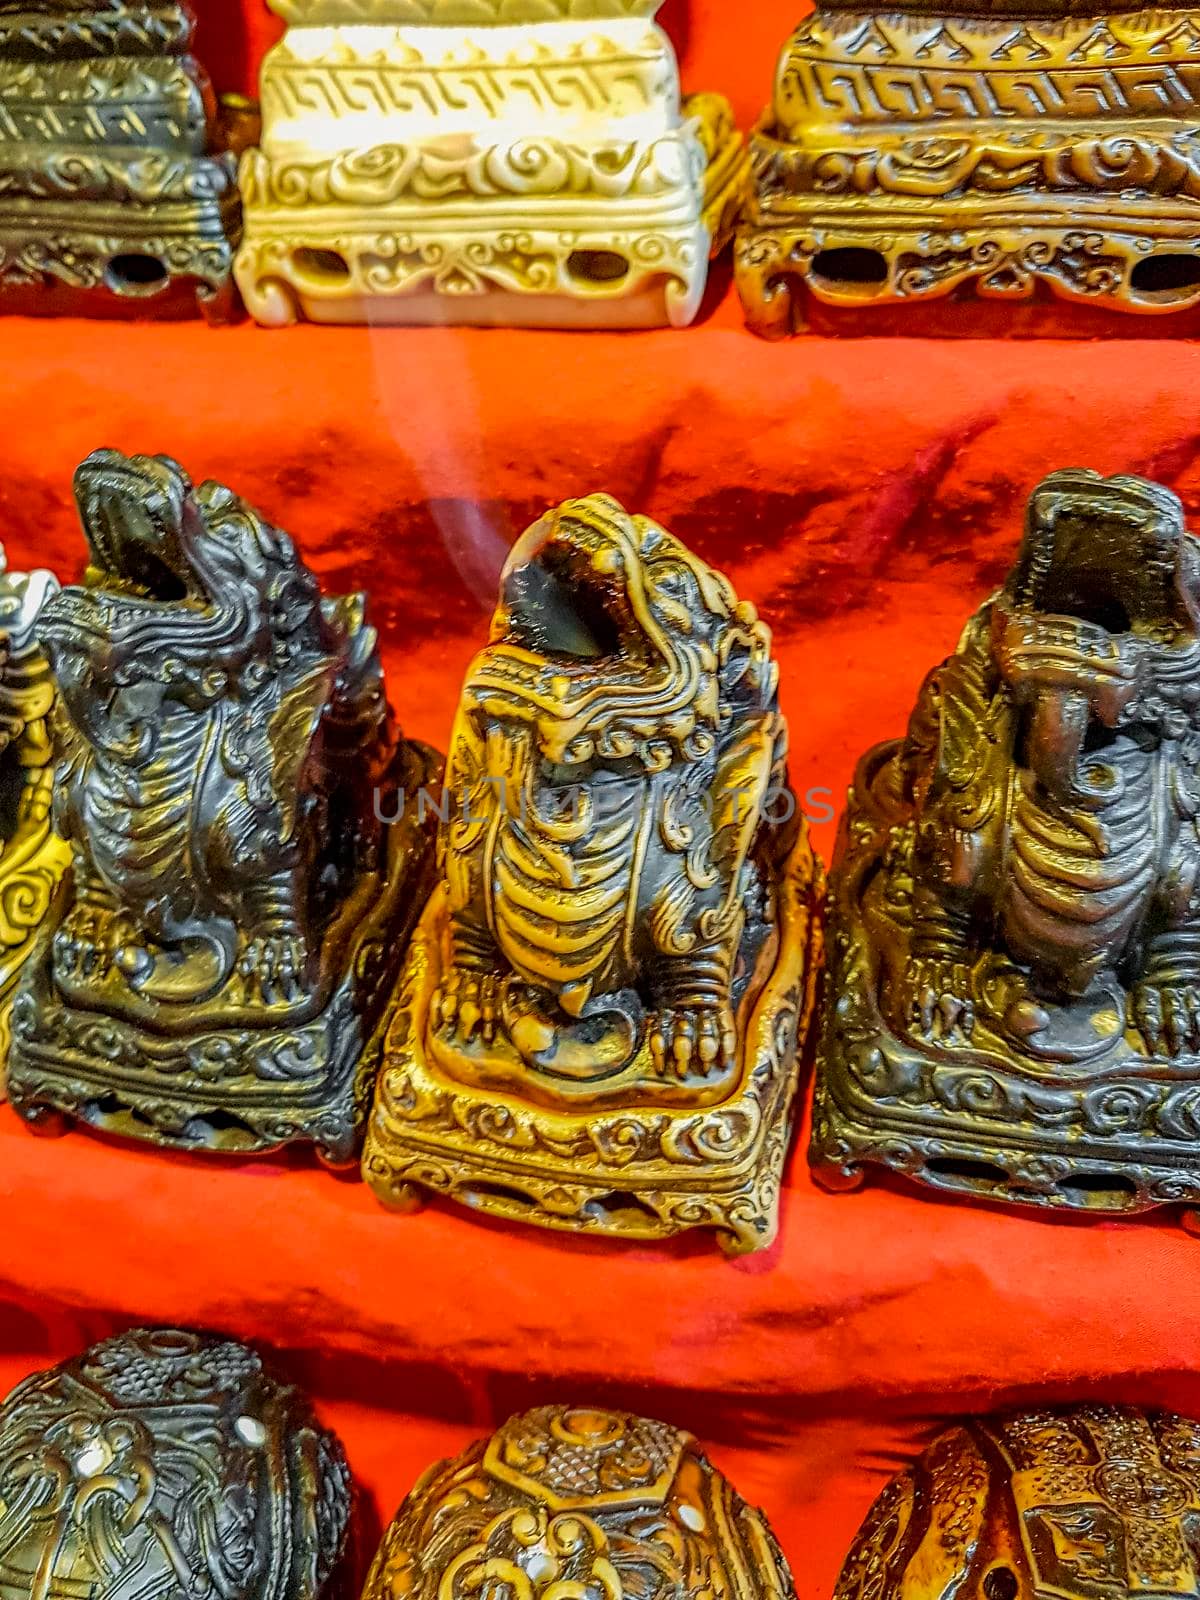 Buddha statues chinese lion figures stupas and holy shrines on Koh Samui island in Surat Thani Thailand.